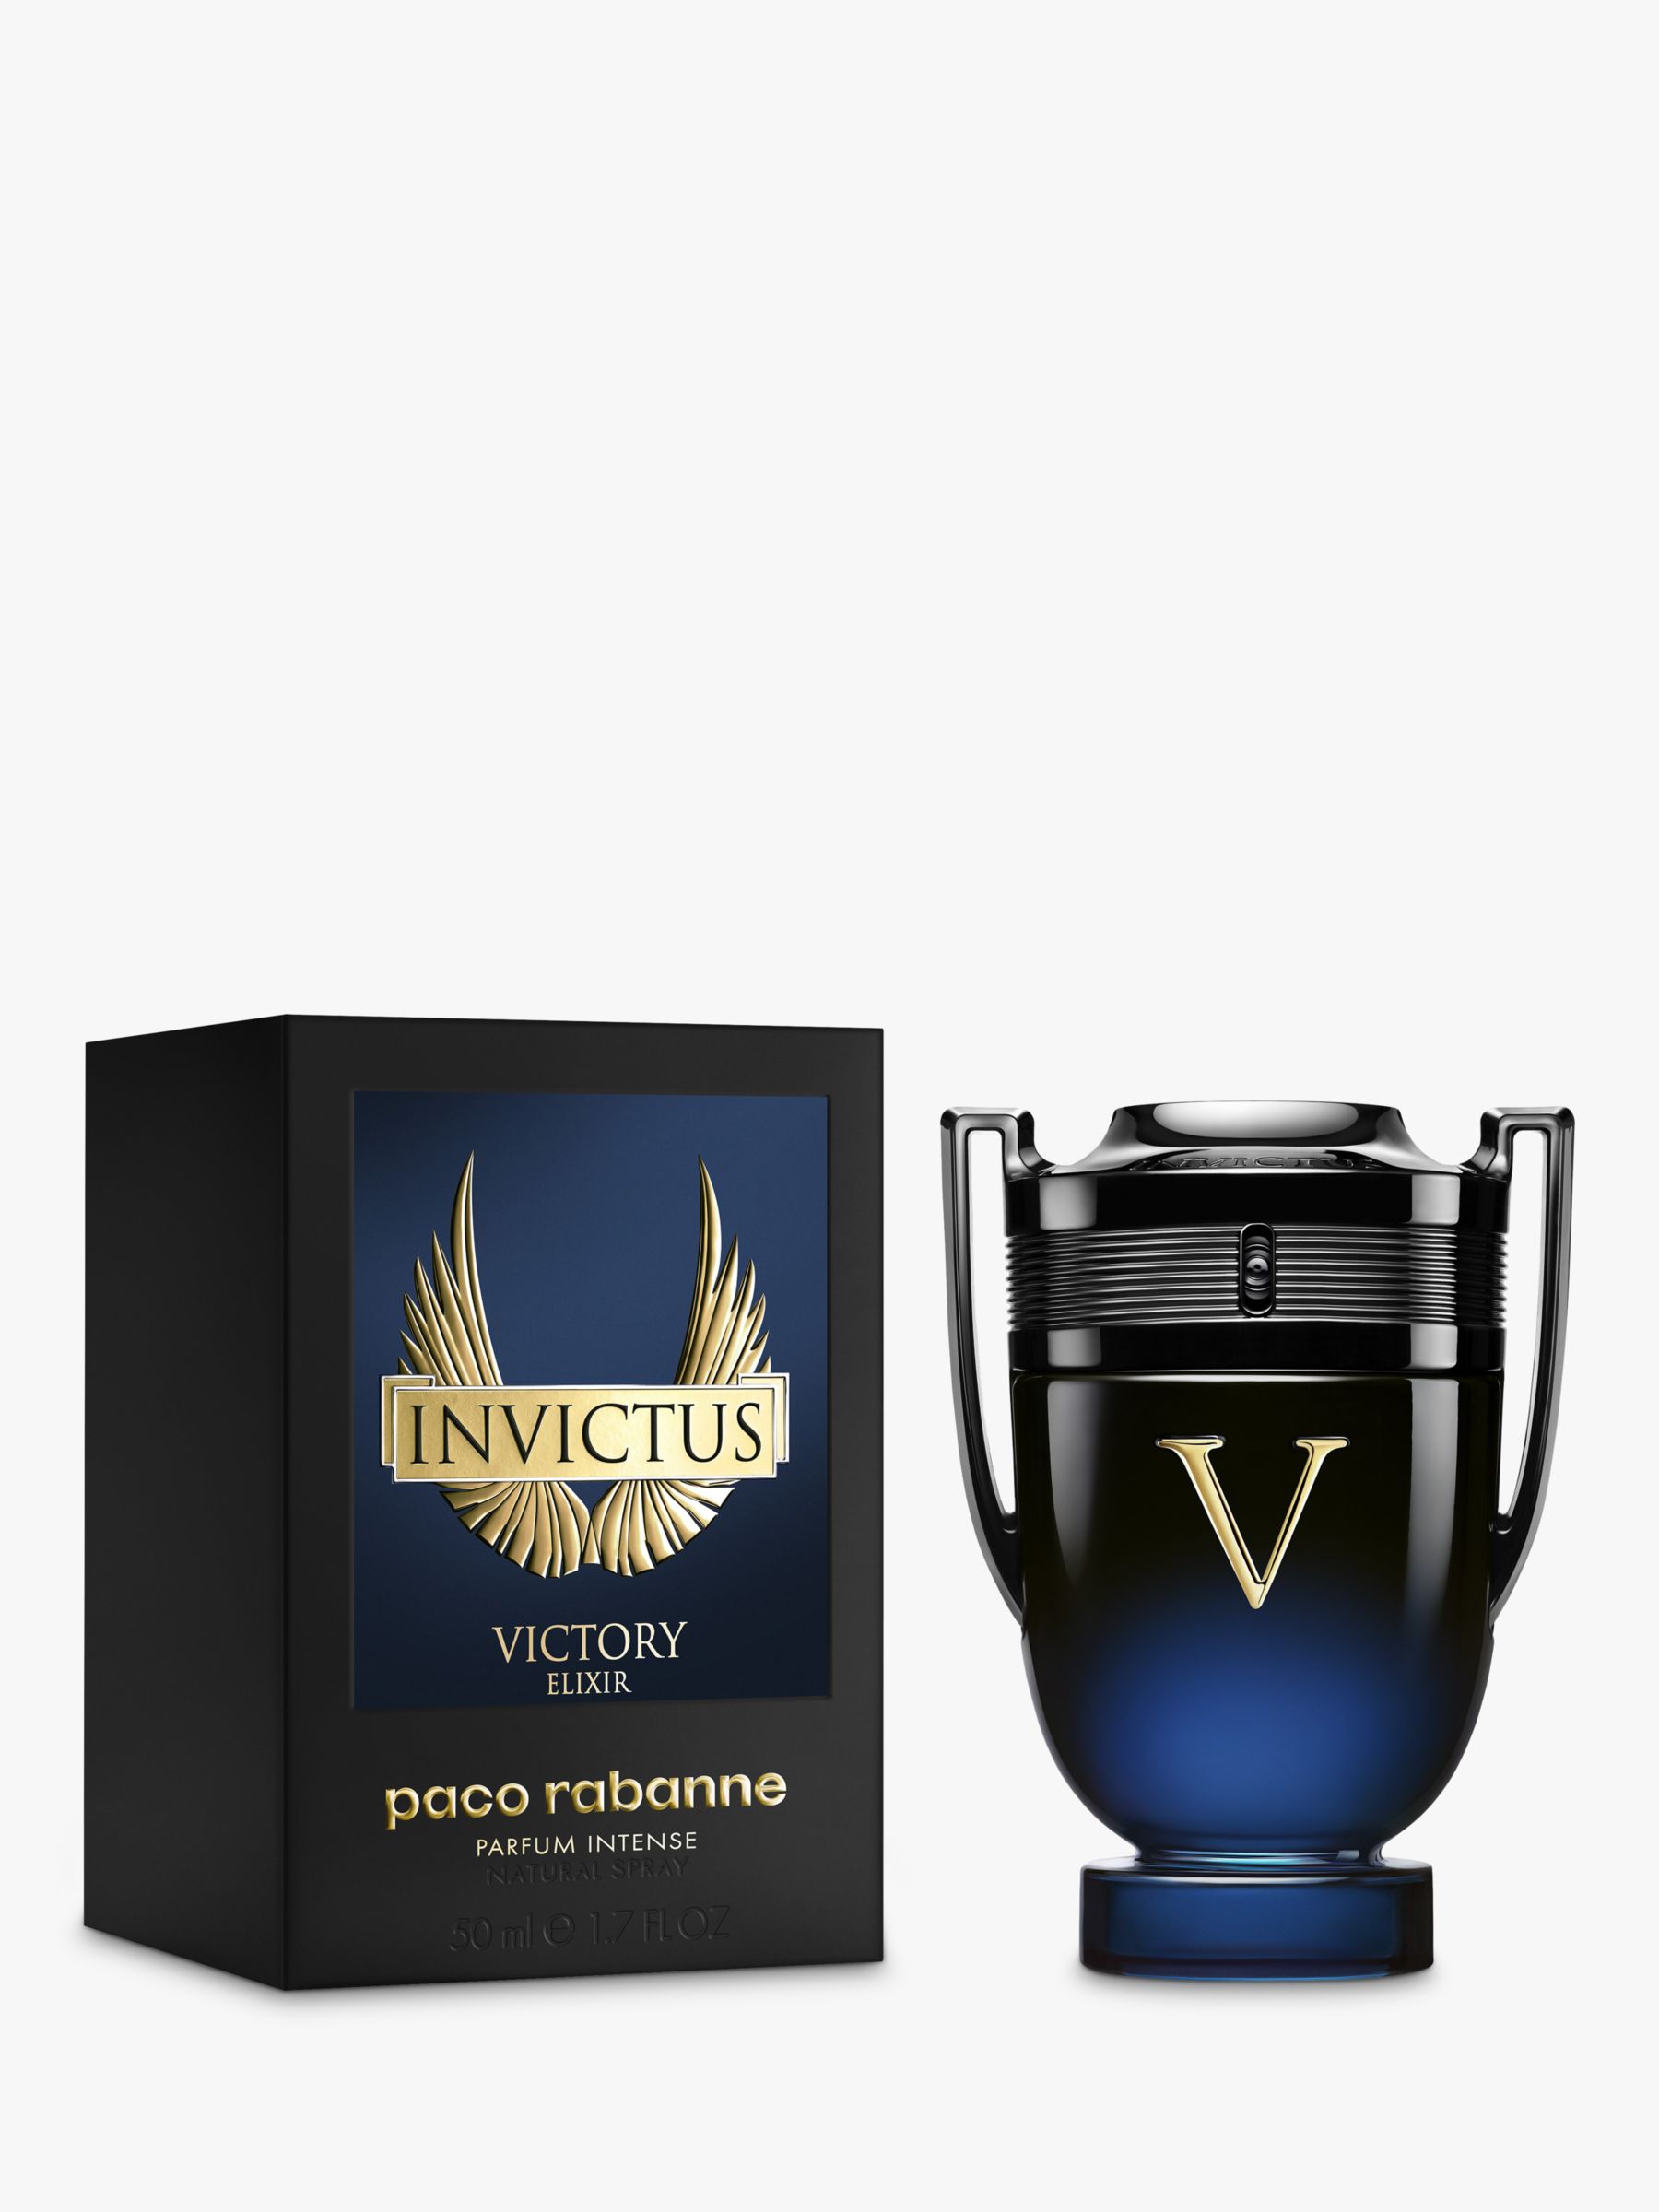 Rabanne Invictus Victory Elixir Parfum Intense, 50ml 2